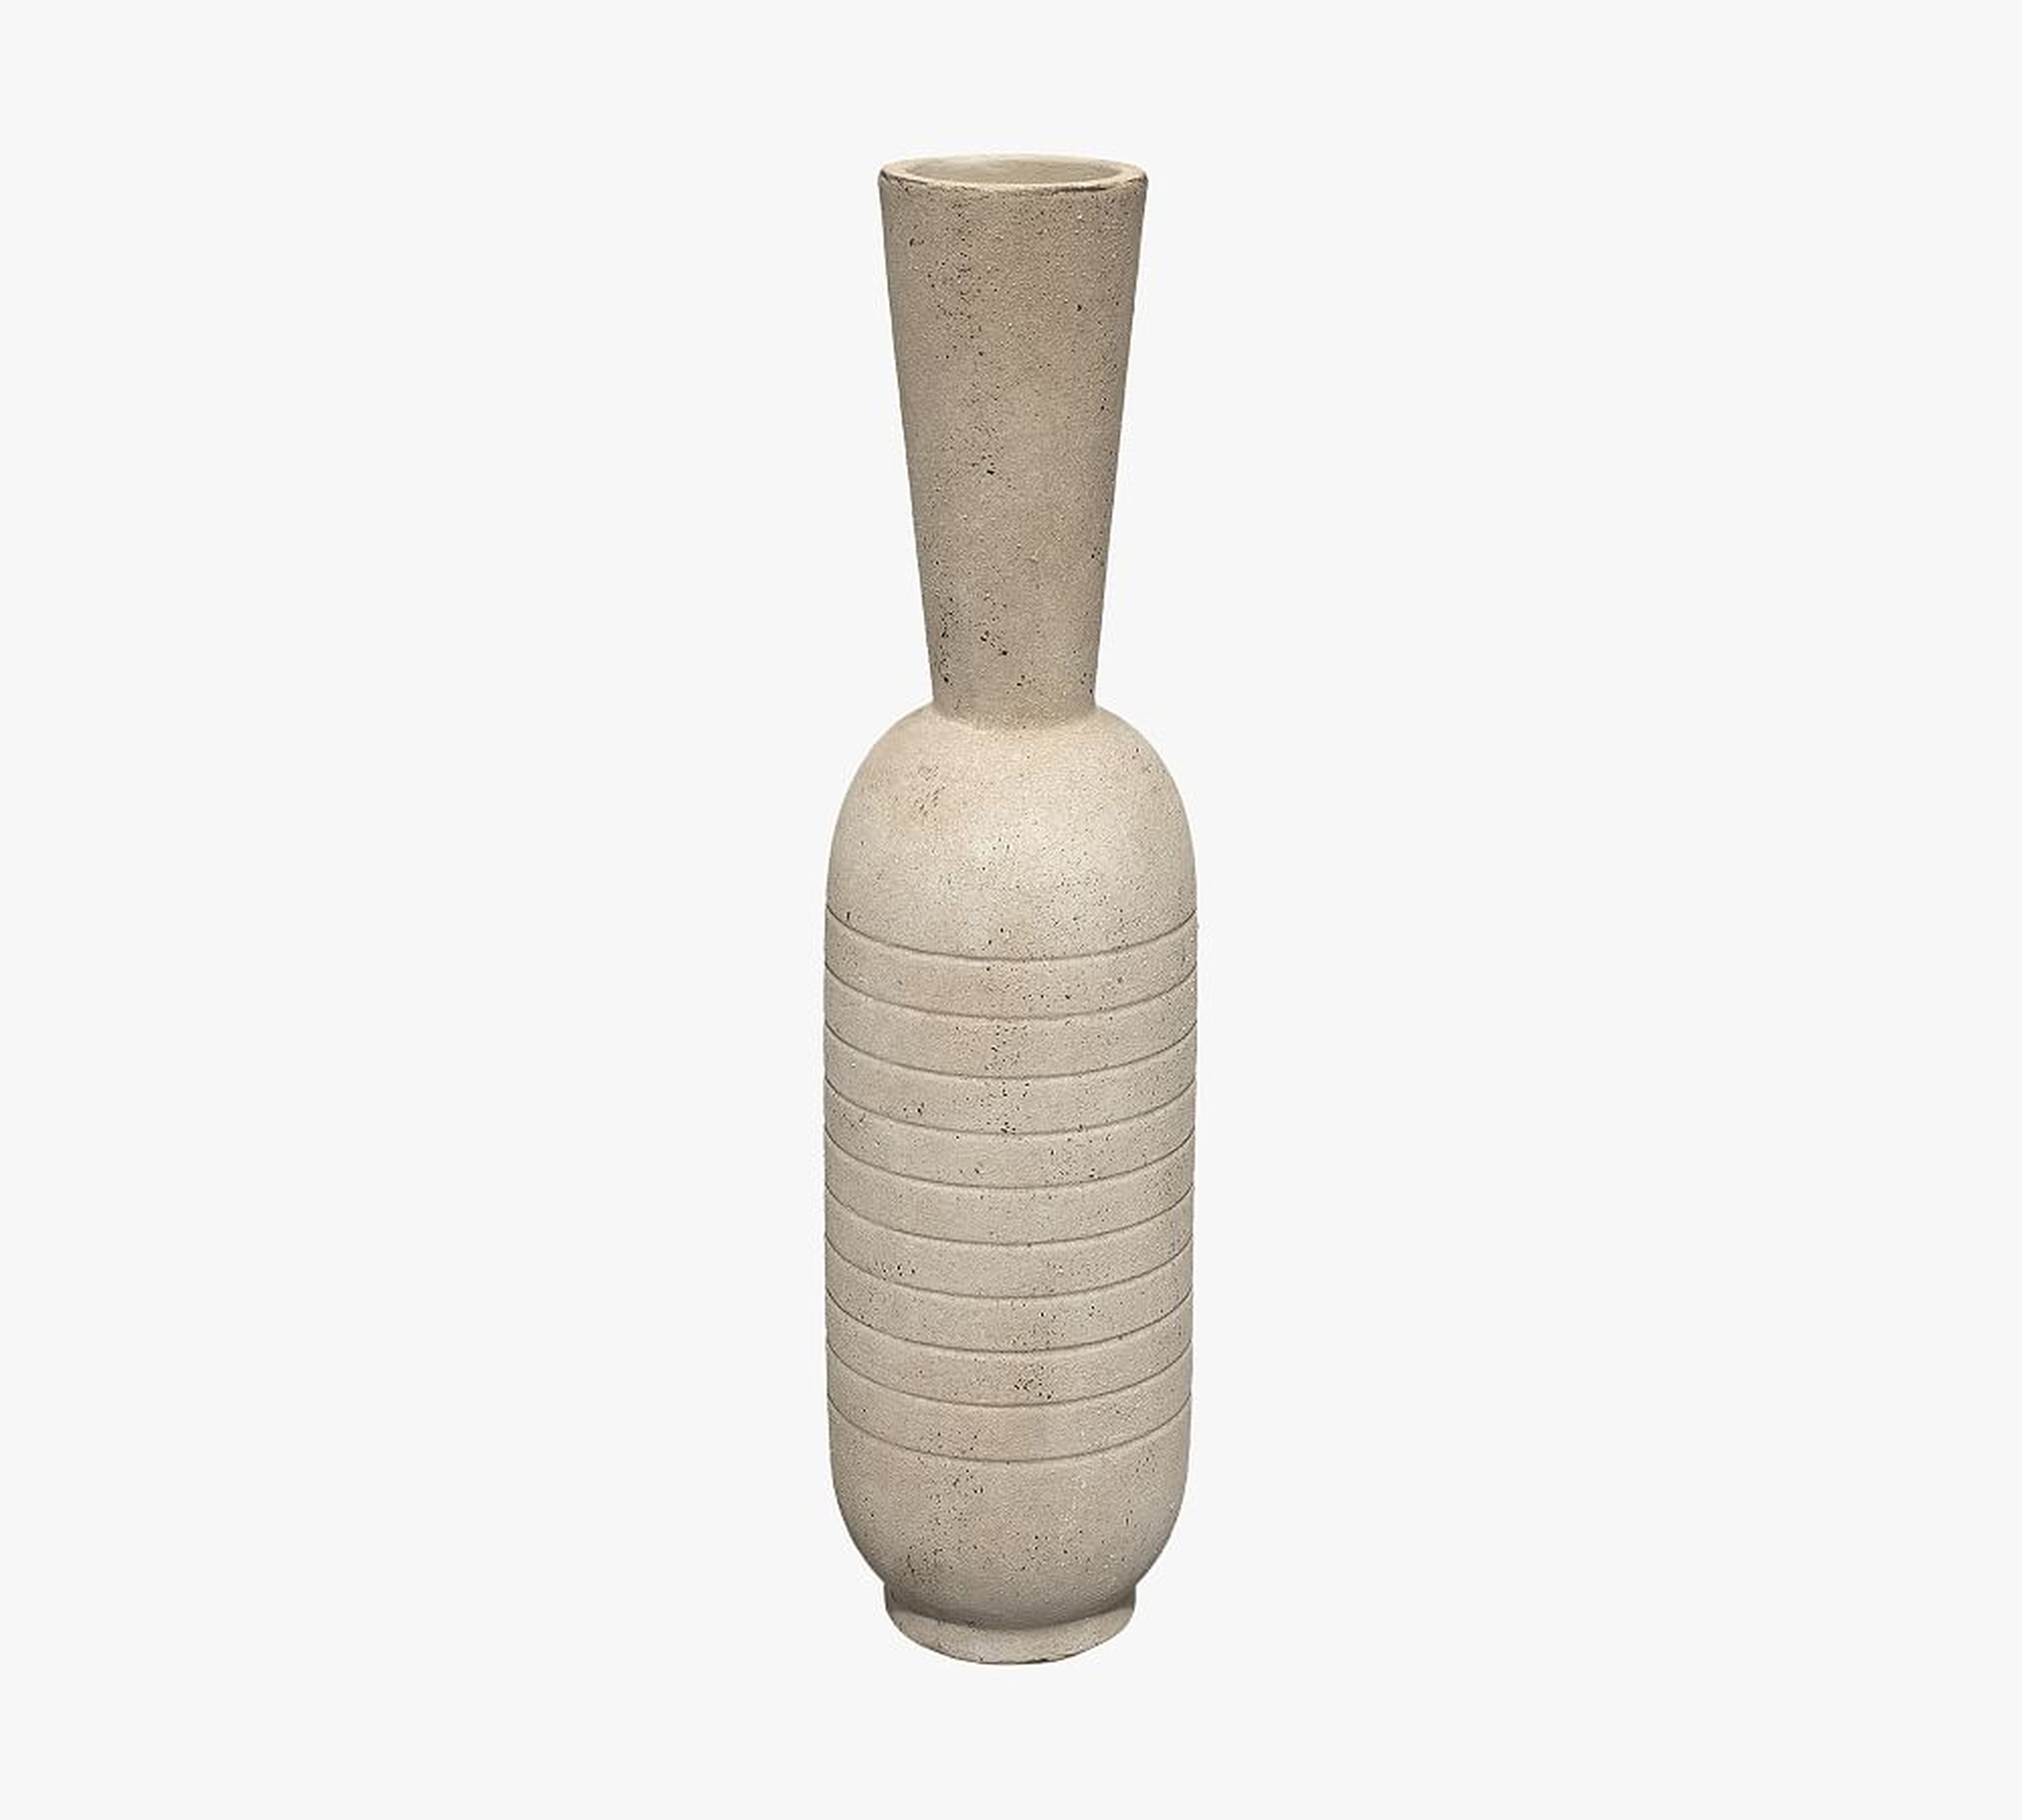 Haut Handcrafted Ceramic Vase, 17"H, Cream - Pottery Barn